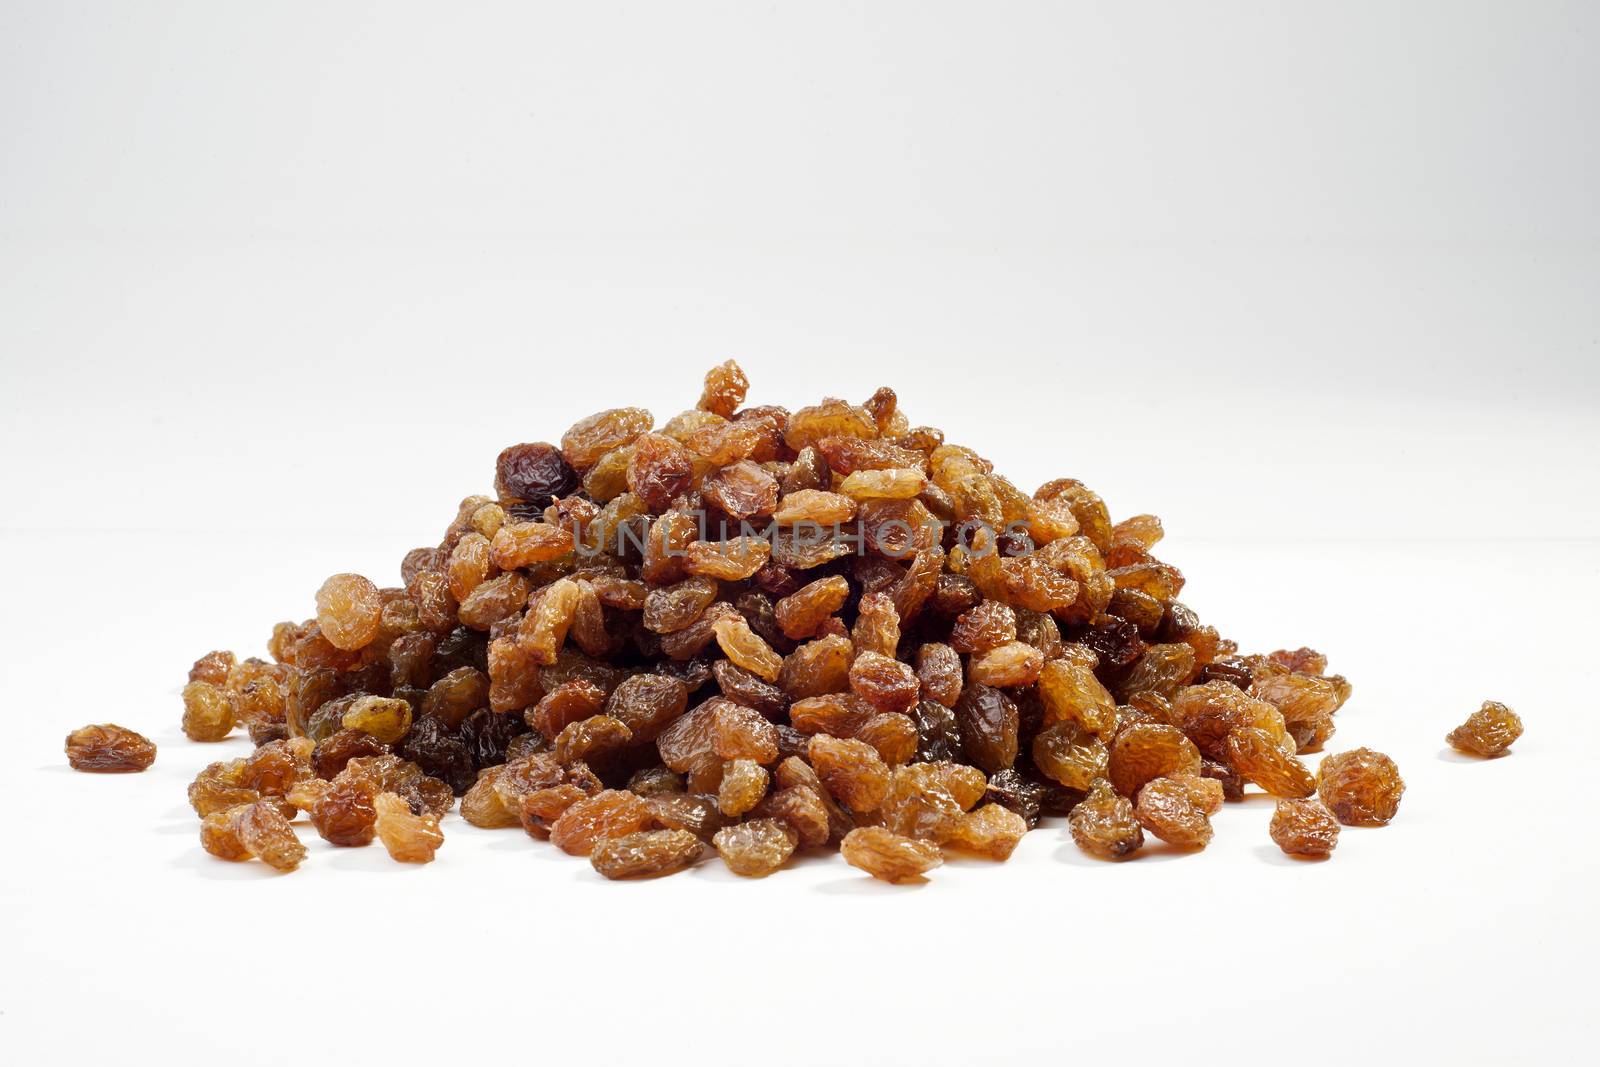 sack of raisins